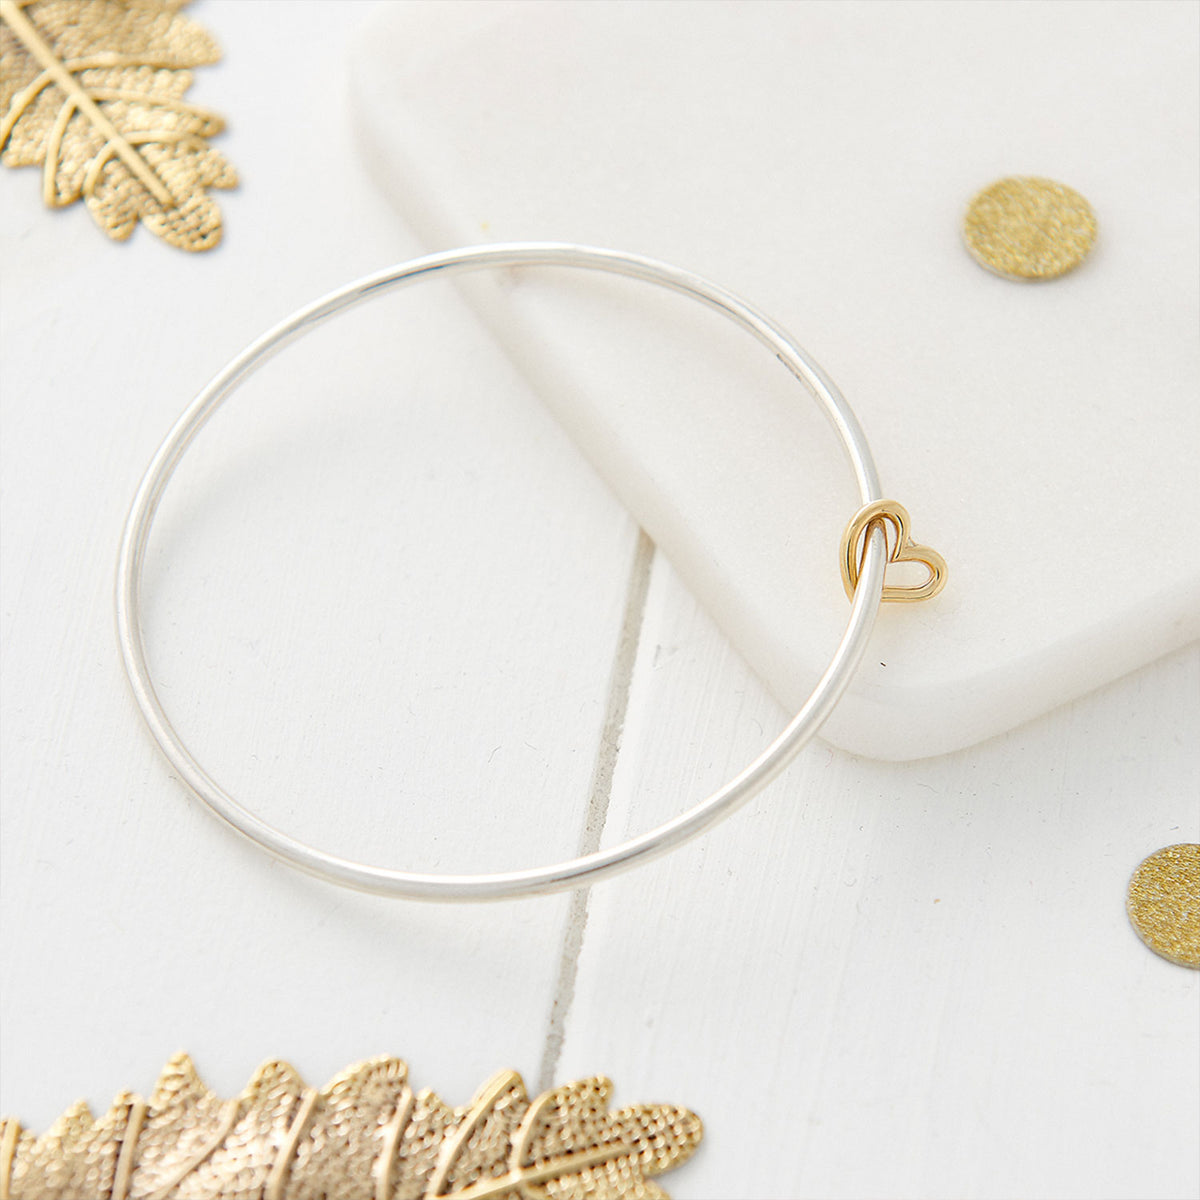 Solid silver and gold open heart charm bangle designer bracelet Scarlett Jewellery